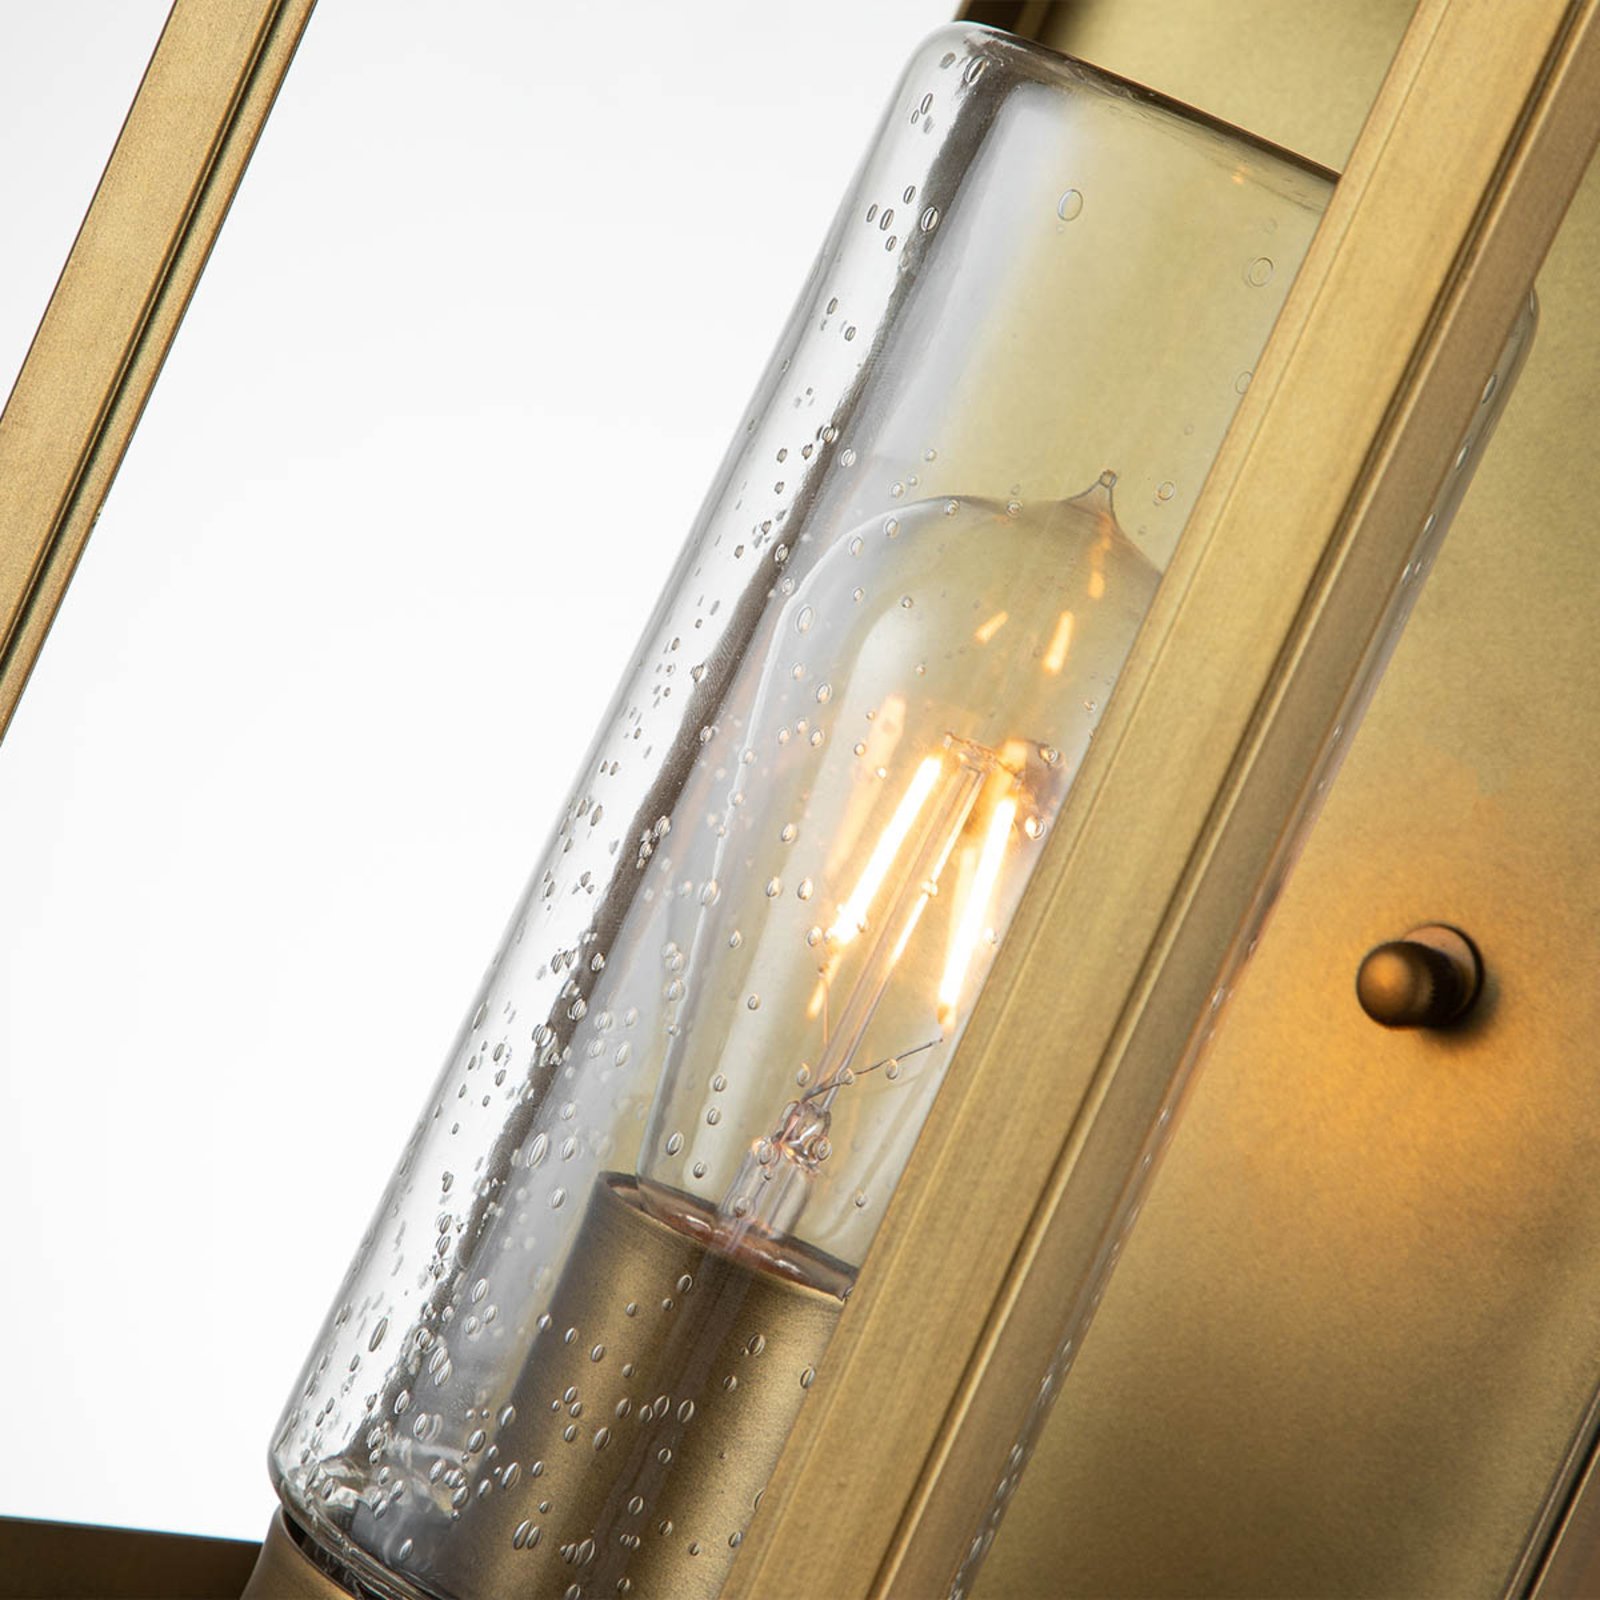 Atwater outdoor wall light, lantern, brass 44.5cm